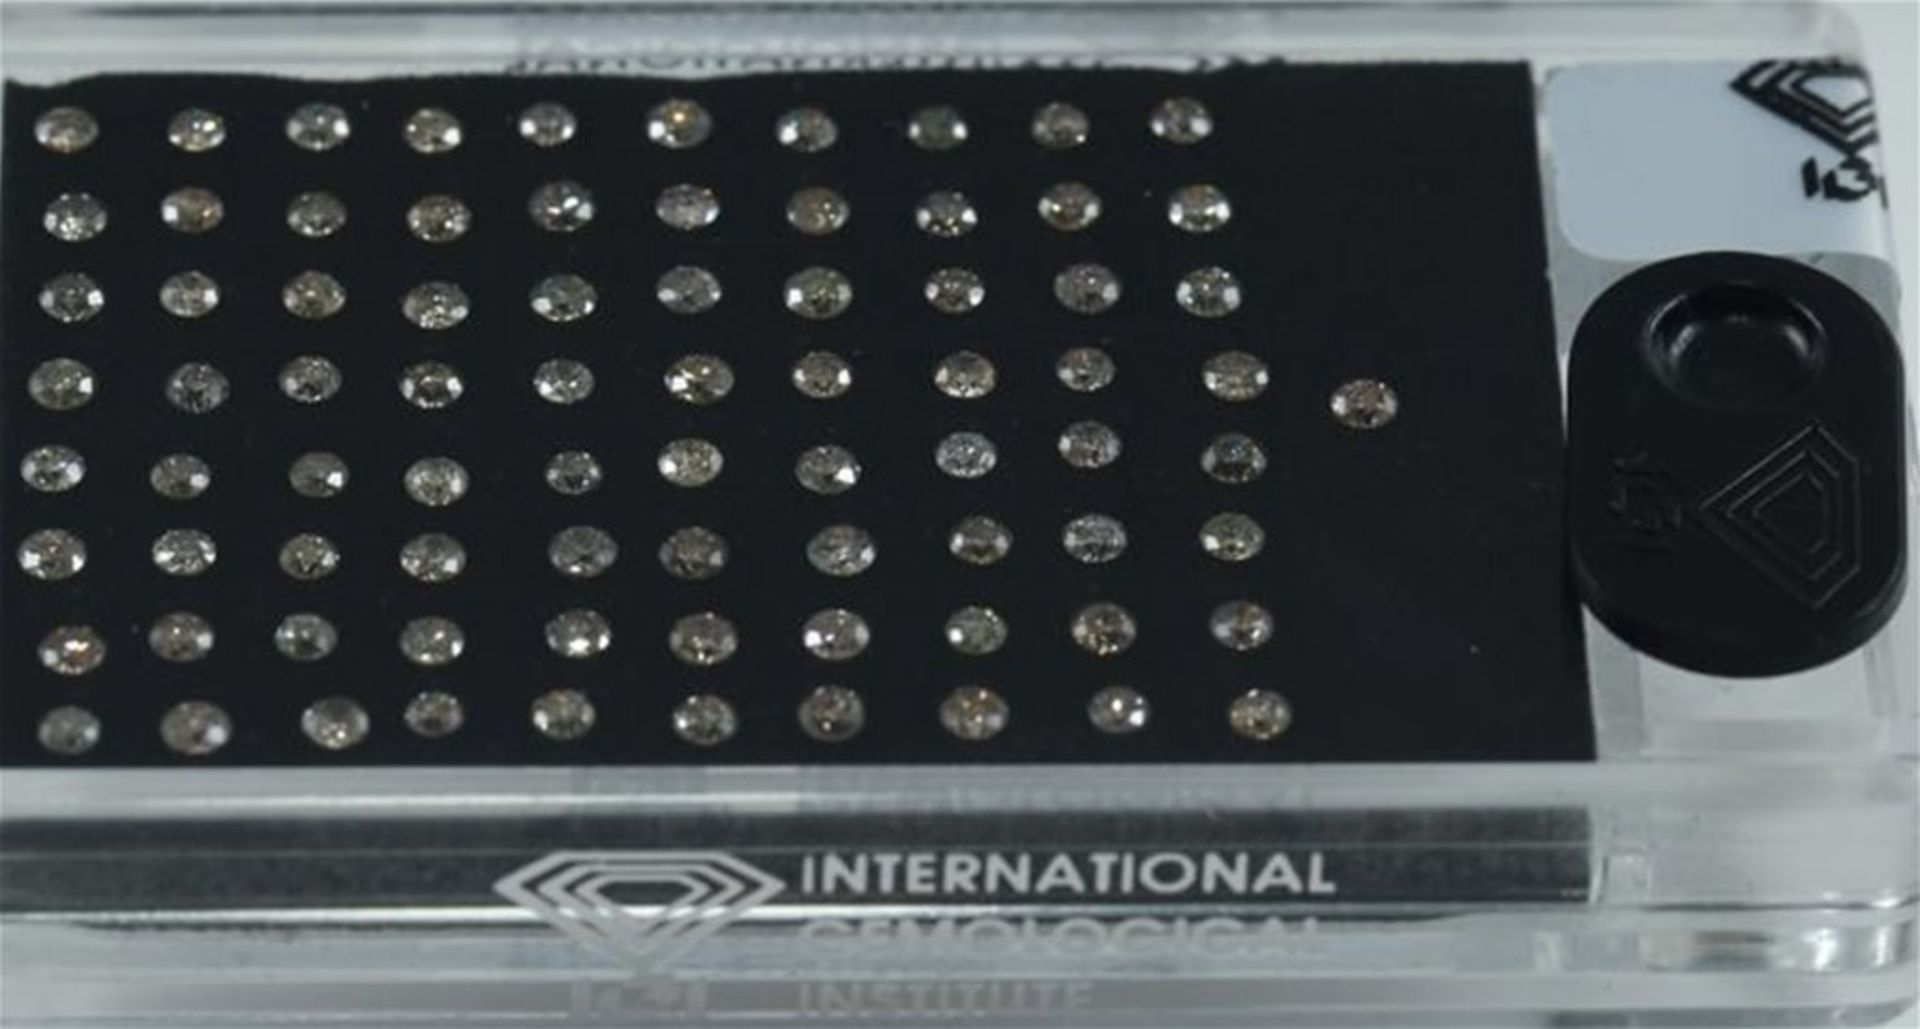 IGI Certified Sealed 3.32 ct. Diamond “D Box” UNTREATED - Image 3 of 4